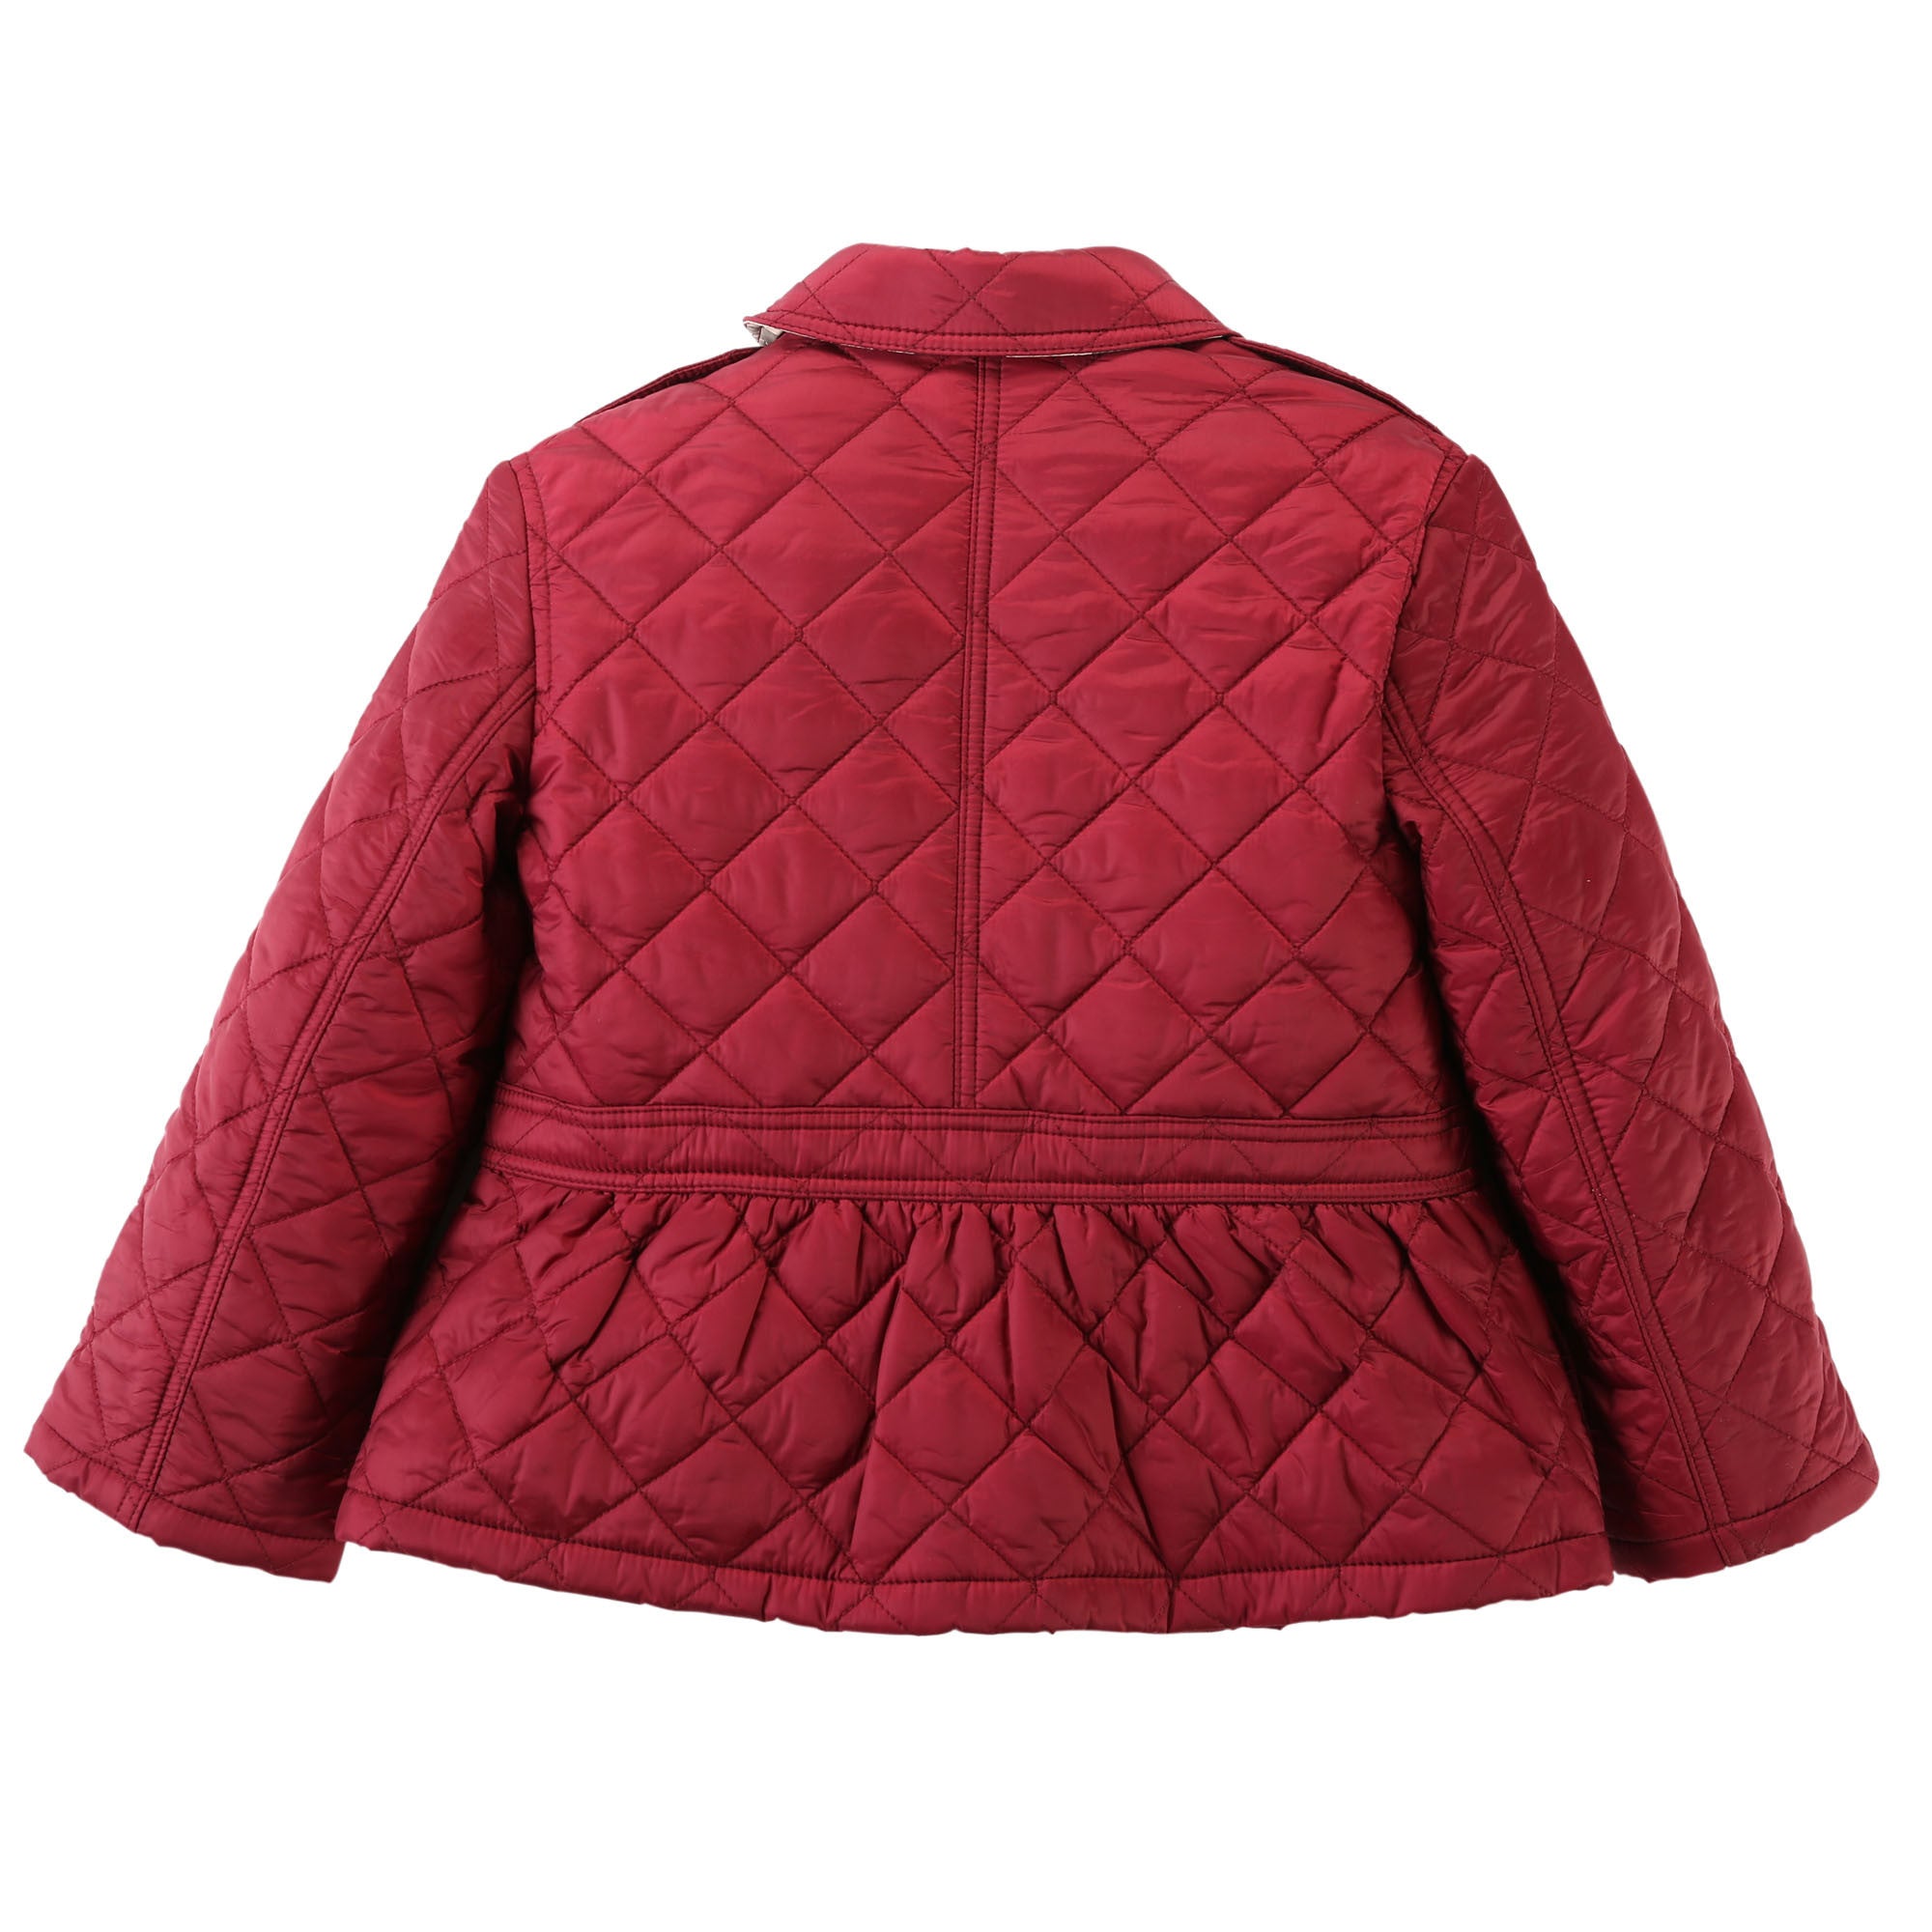 Baby Girls Dark Pink Quilted Jacket With Check Trim - CÉMAROSE | Children's Fashion Store - 2